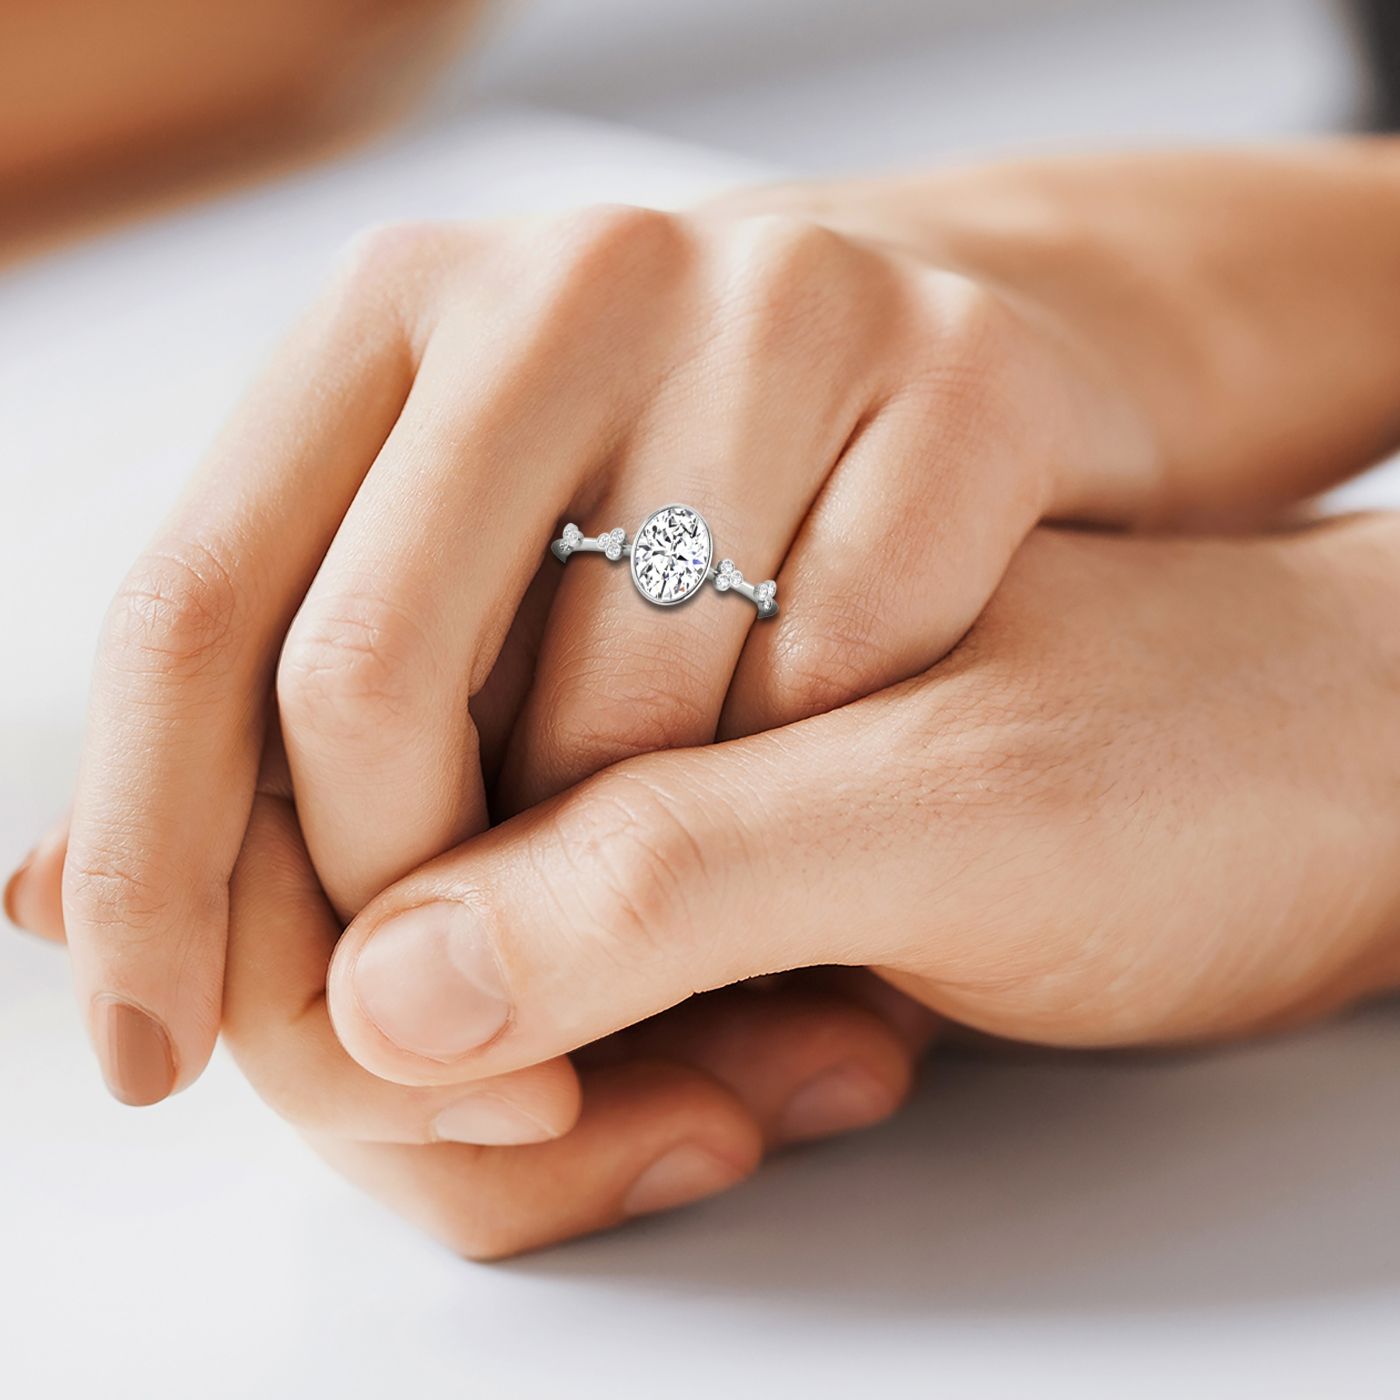 14kw Bezel Set Oval Engagement Ring With 12 Clover Bezel Set Round Diamonds On Shank